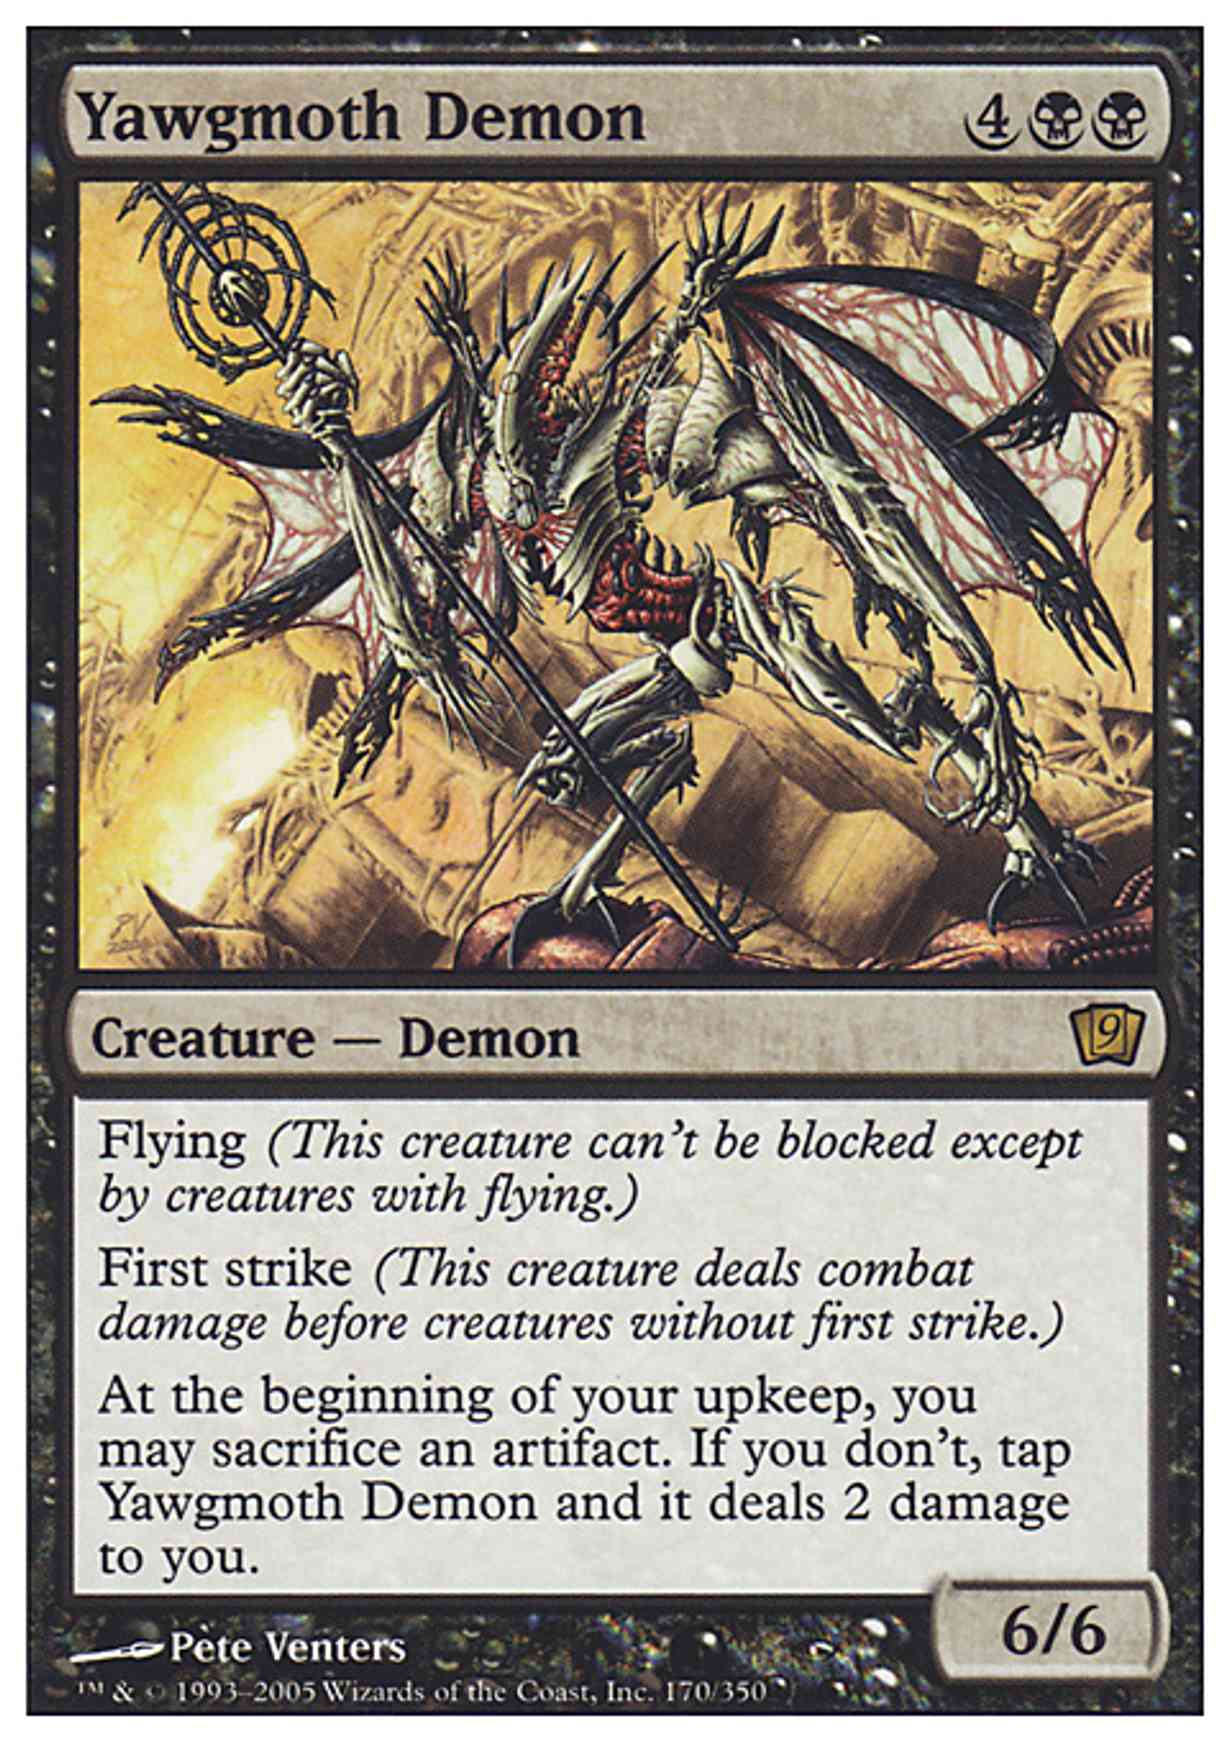 Yawgmoth Demon magic card front